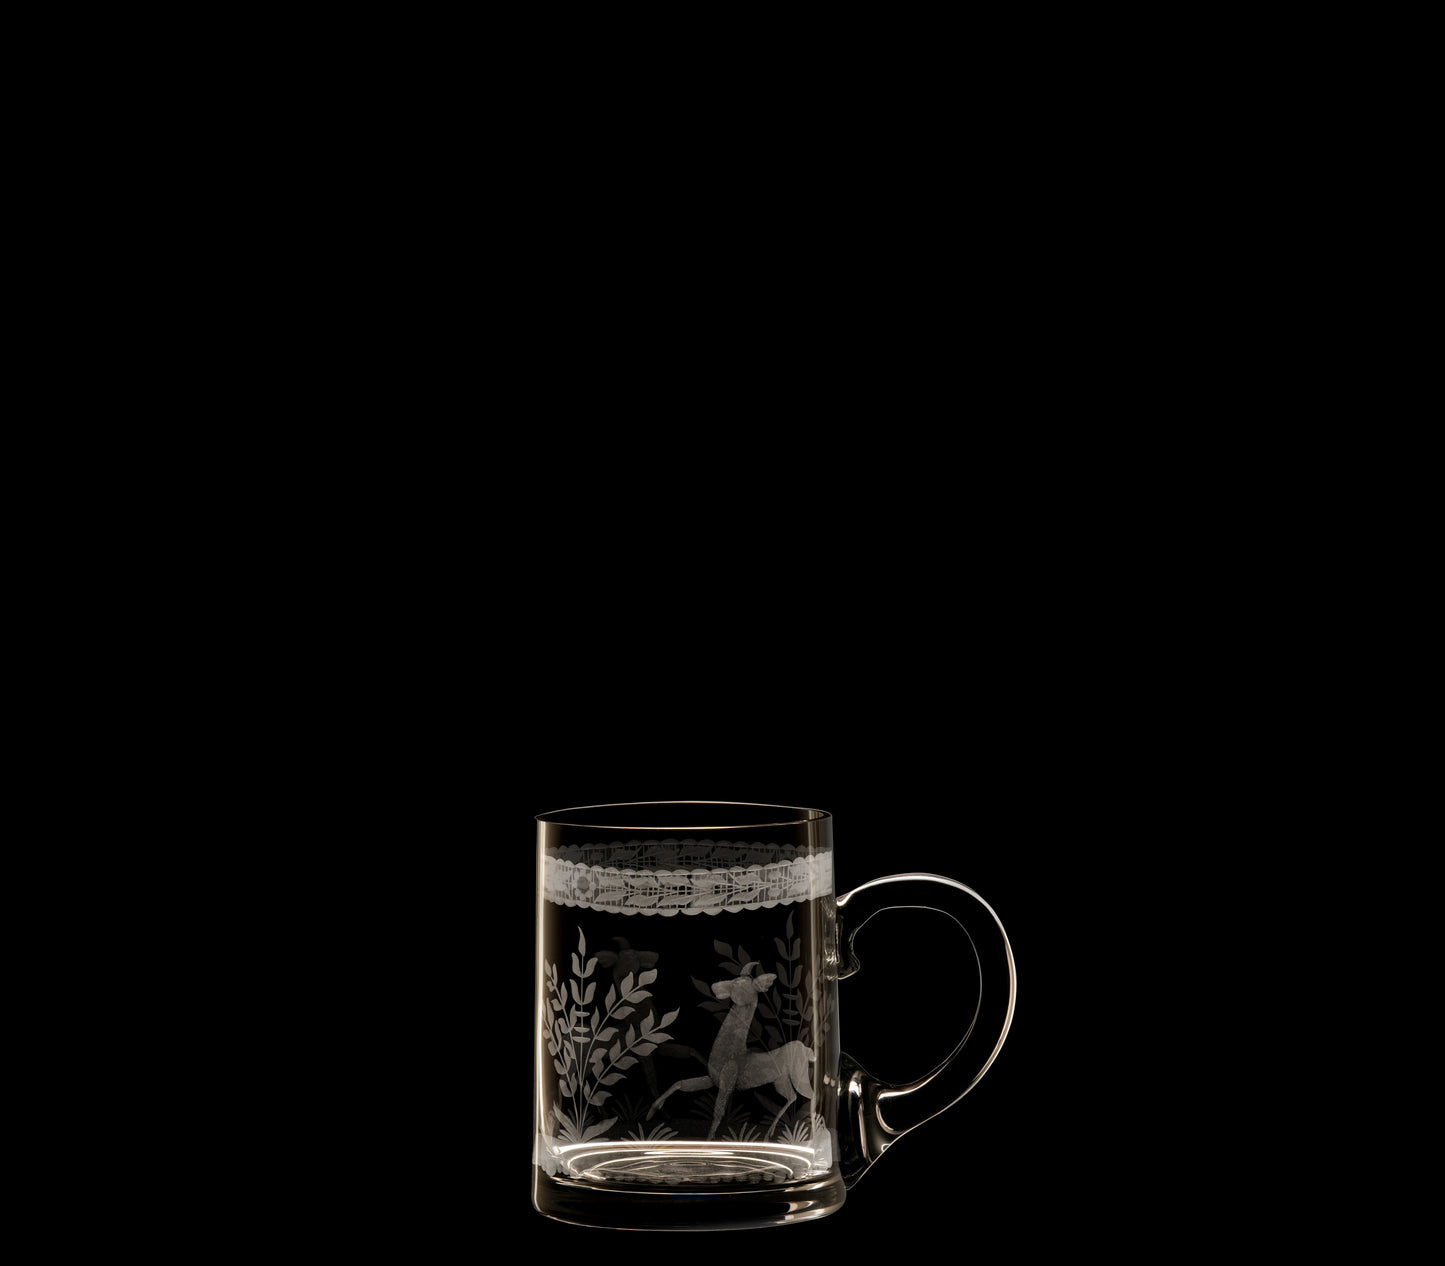 Lobmeyr Drinking Set No. 233 "Tiroler Hirsch" Beer Mug designed by Stefan Rath in 1910 (Austria)